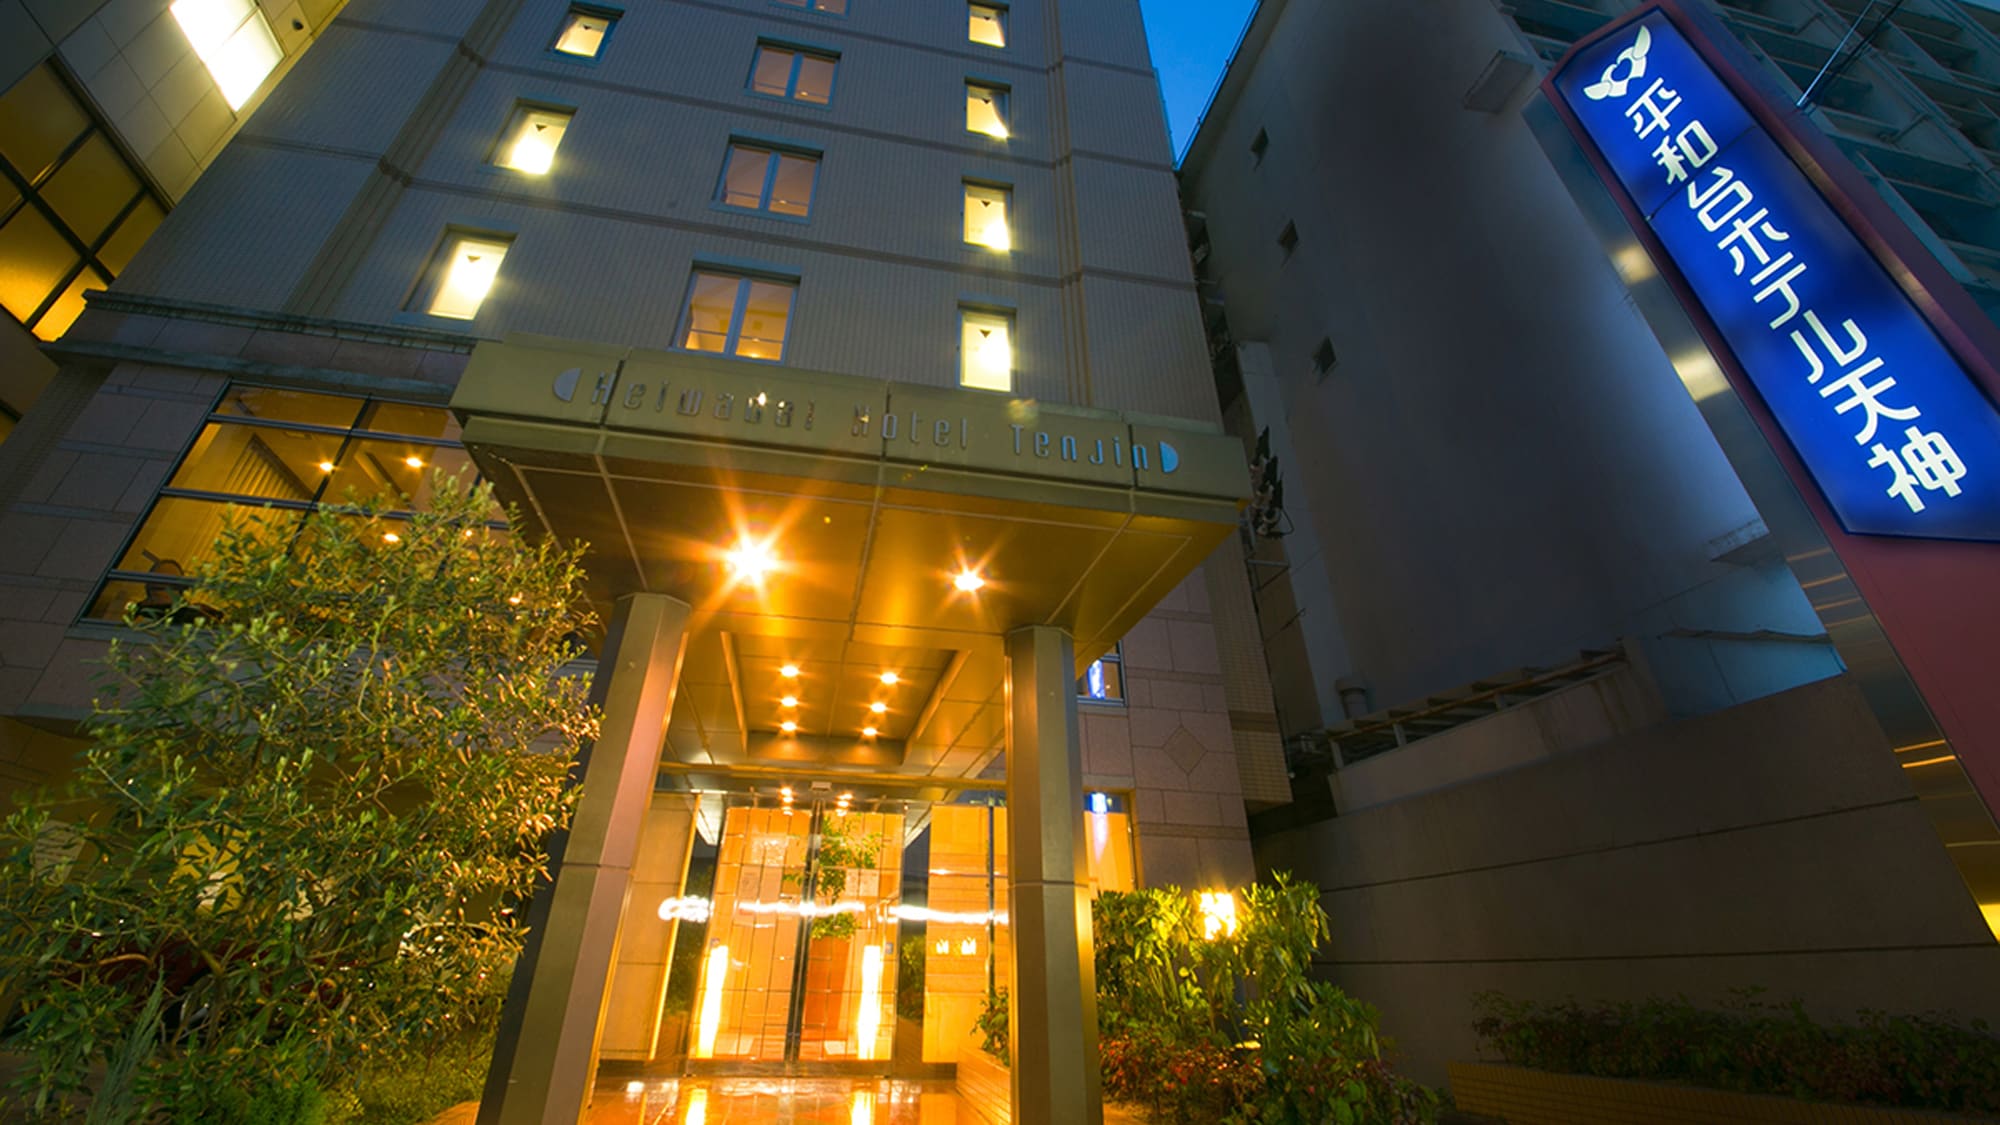 [Heiwadai Hotel Tenjin] Nyaman untuk berbelanja dan bisnis, Heiwadai Hotel Tenjin berjarak 8 menit berjalan kaki dari Stasiun Kereta Bawah Tanah Tenjin!